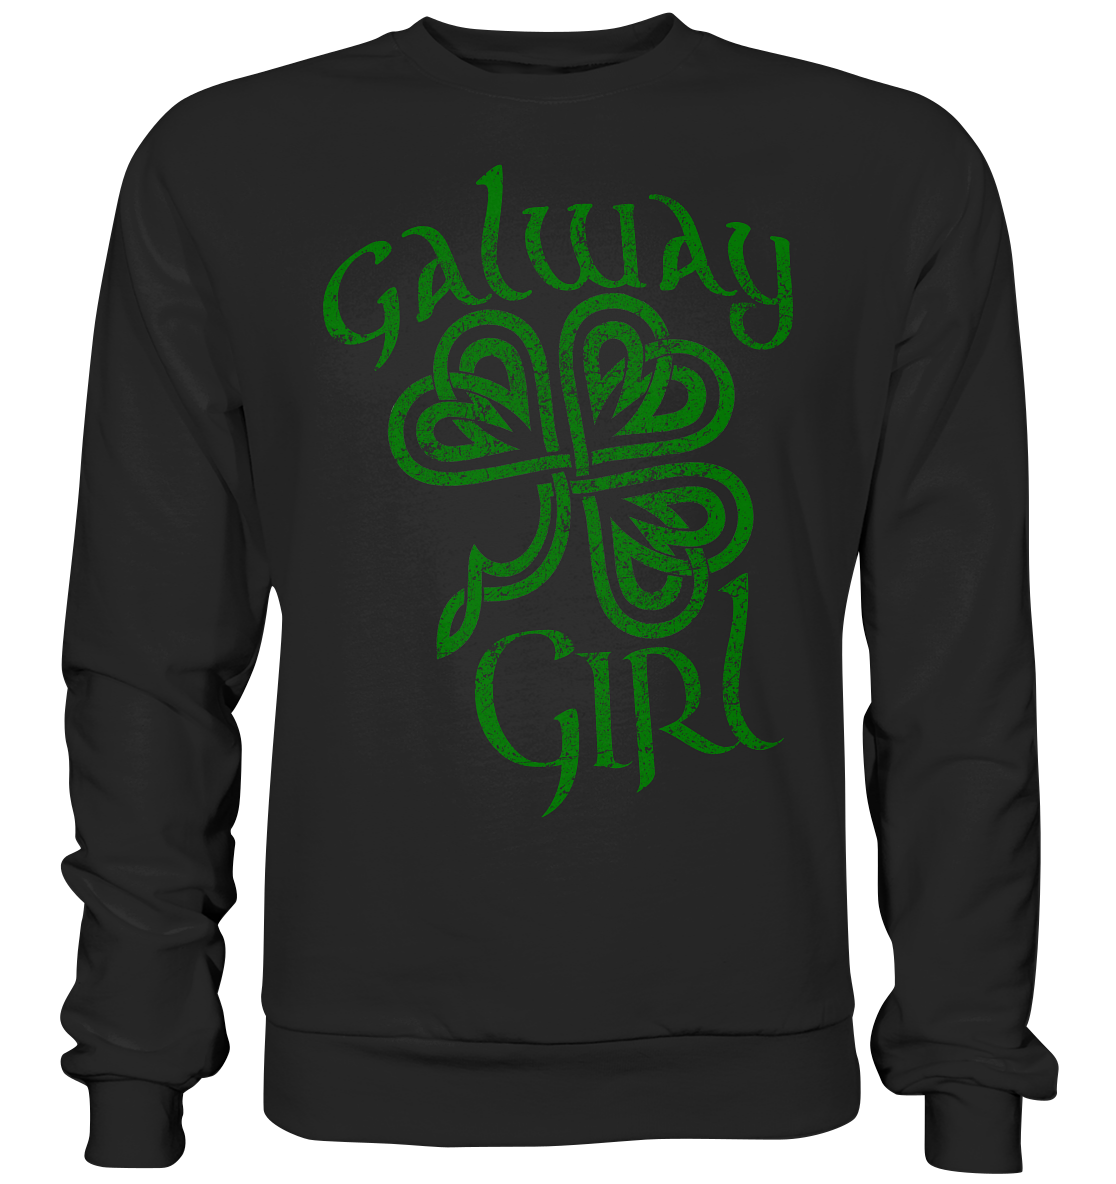 "Galway Girl - Shamrock" - Premium Sweatshirt